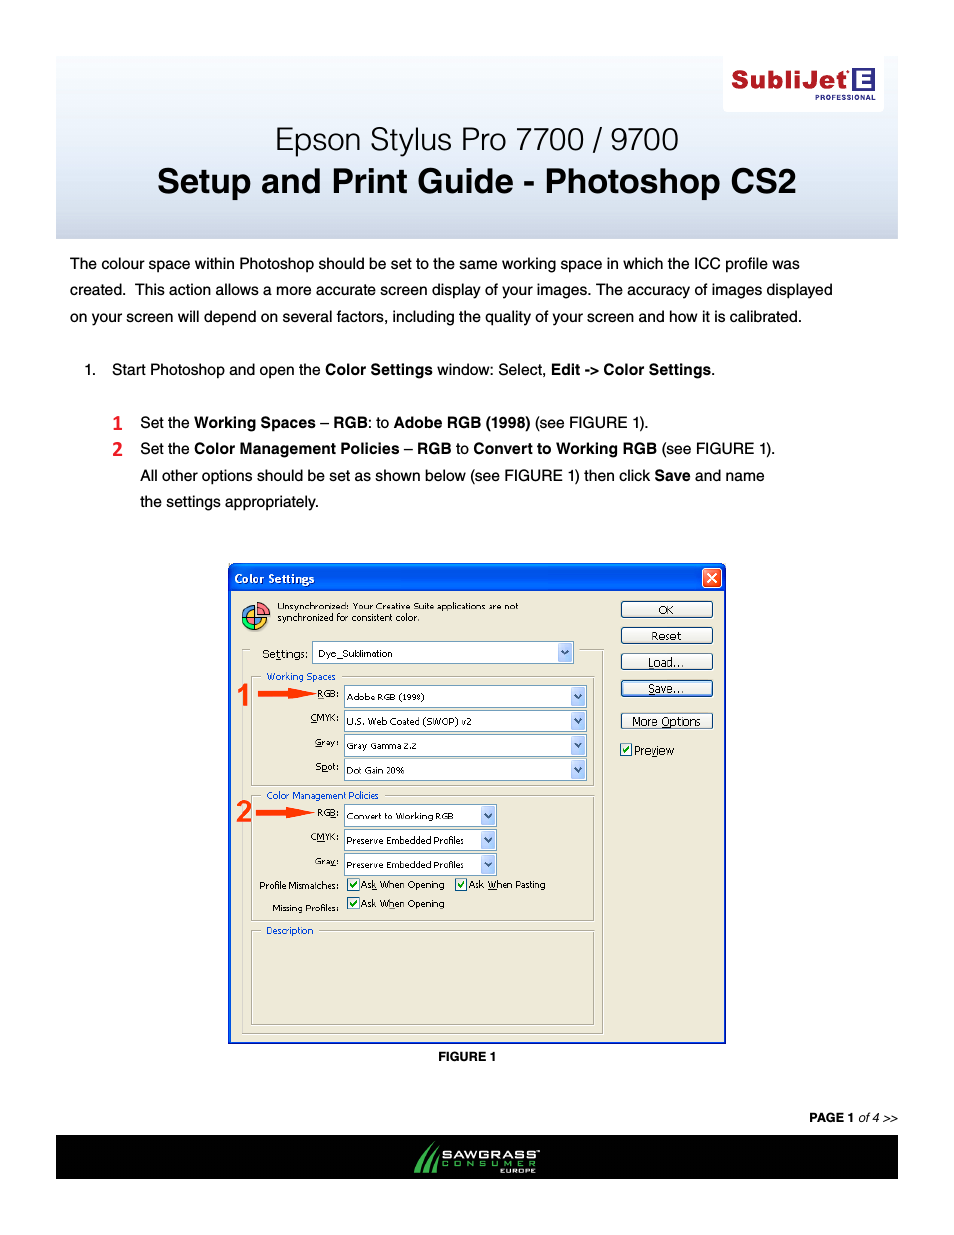 SubliJet E Epson Stylus Pro 7900 (Windows ICC Profile Setup): Print & Setup Guide Photoshop CS2